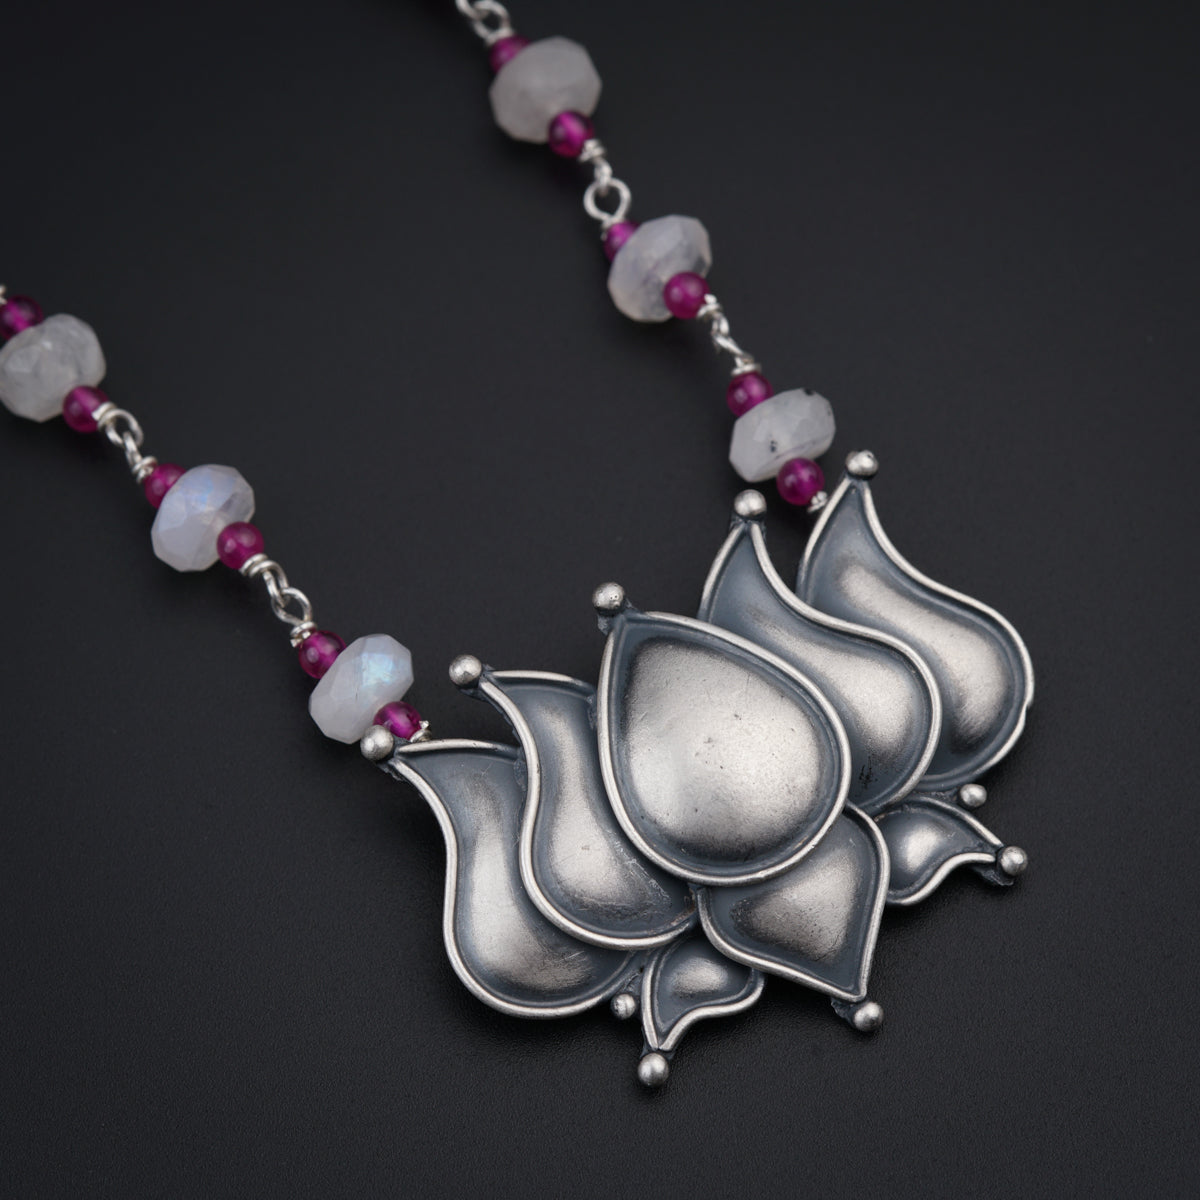 Saroj Semi Precious Stones Necklace with Pearls